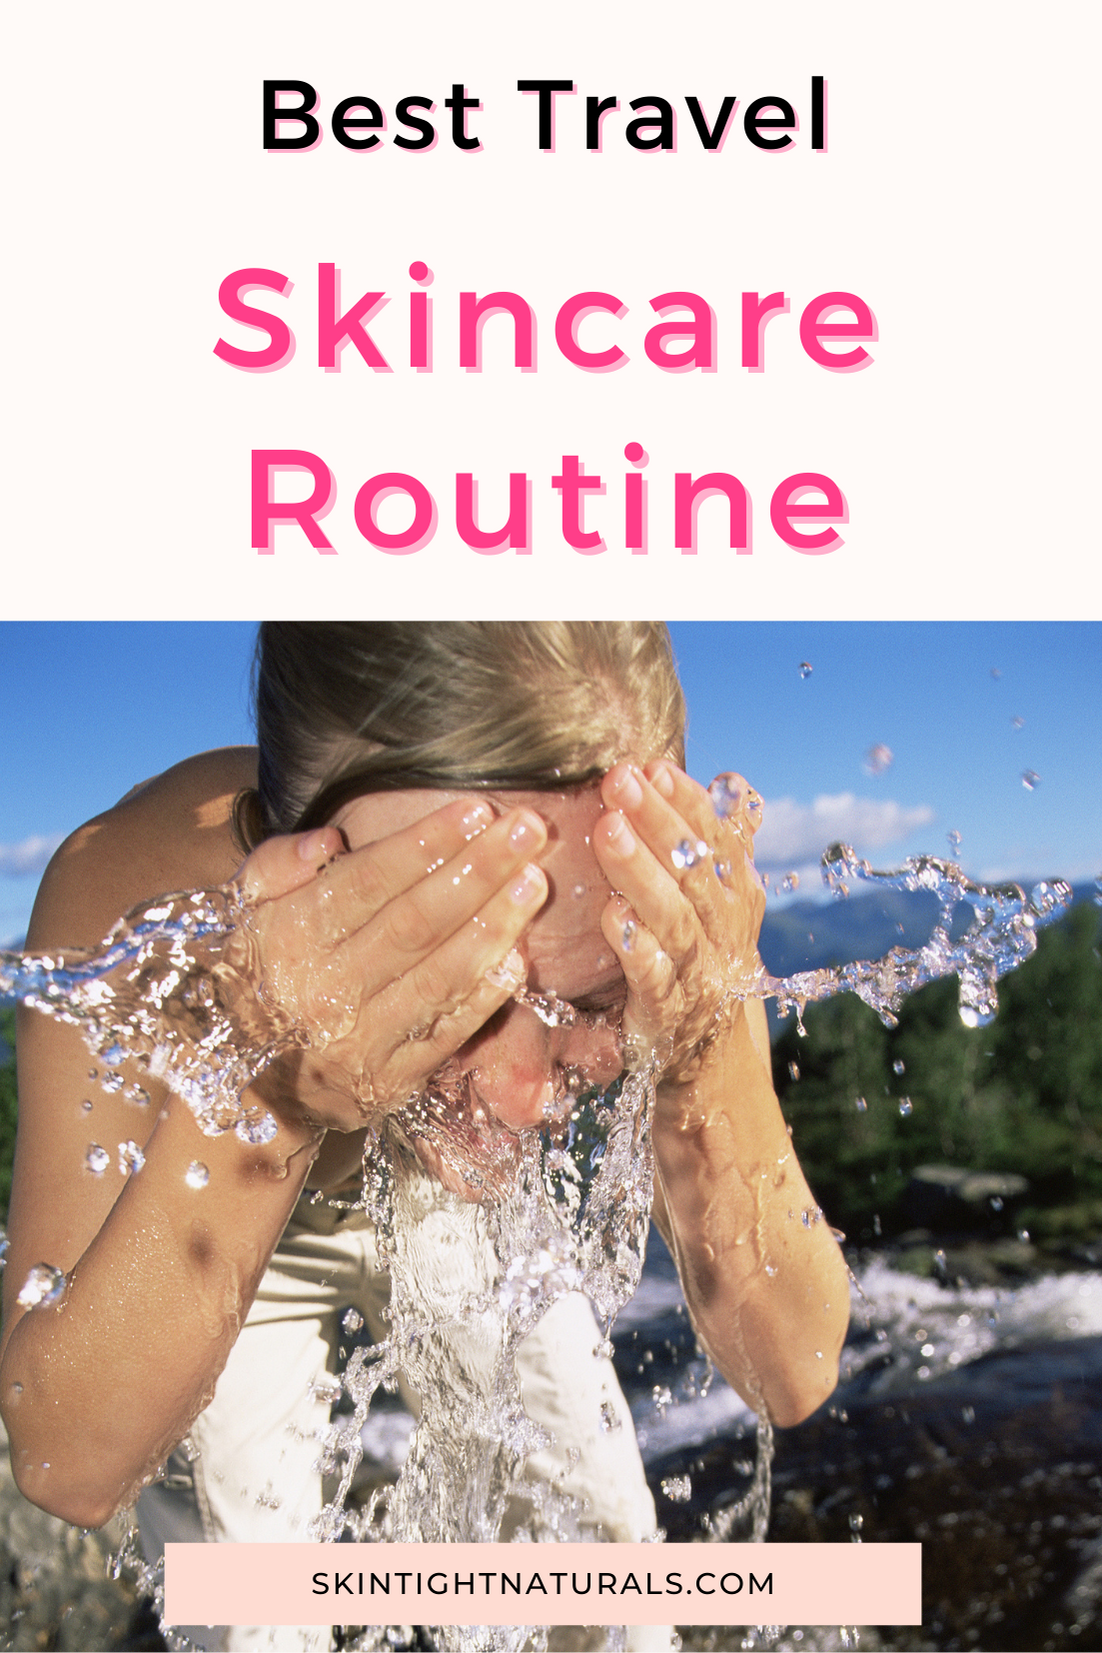 RV Living Skincare Series: Best Travel Skincare Routine